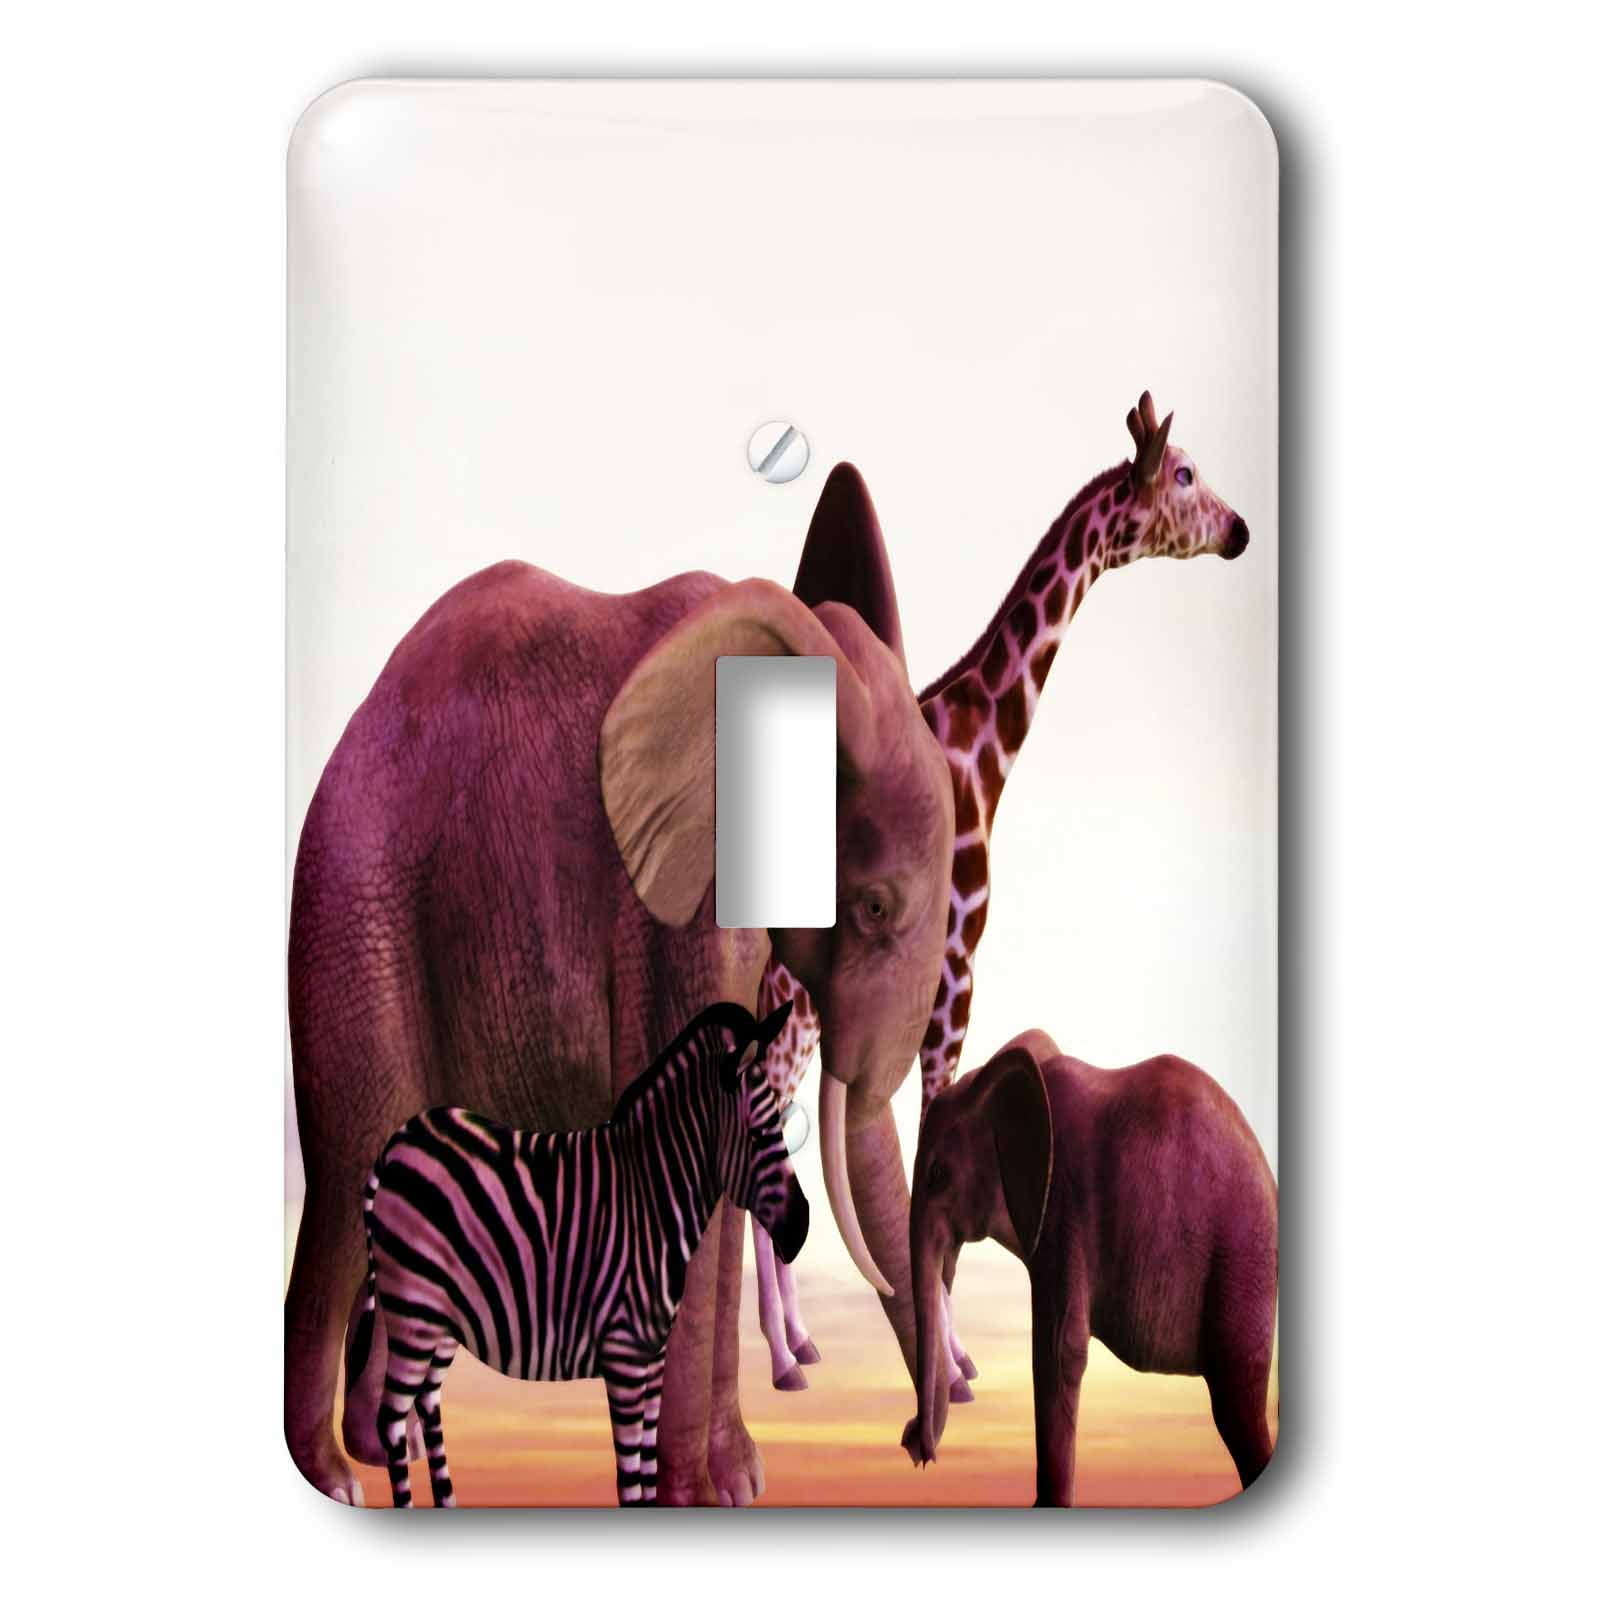 Giraffe Ceramic Tile ct_48977_2 And Zebra 3dRose African Safari With Elephant 6-inch 